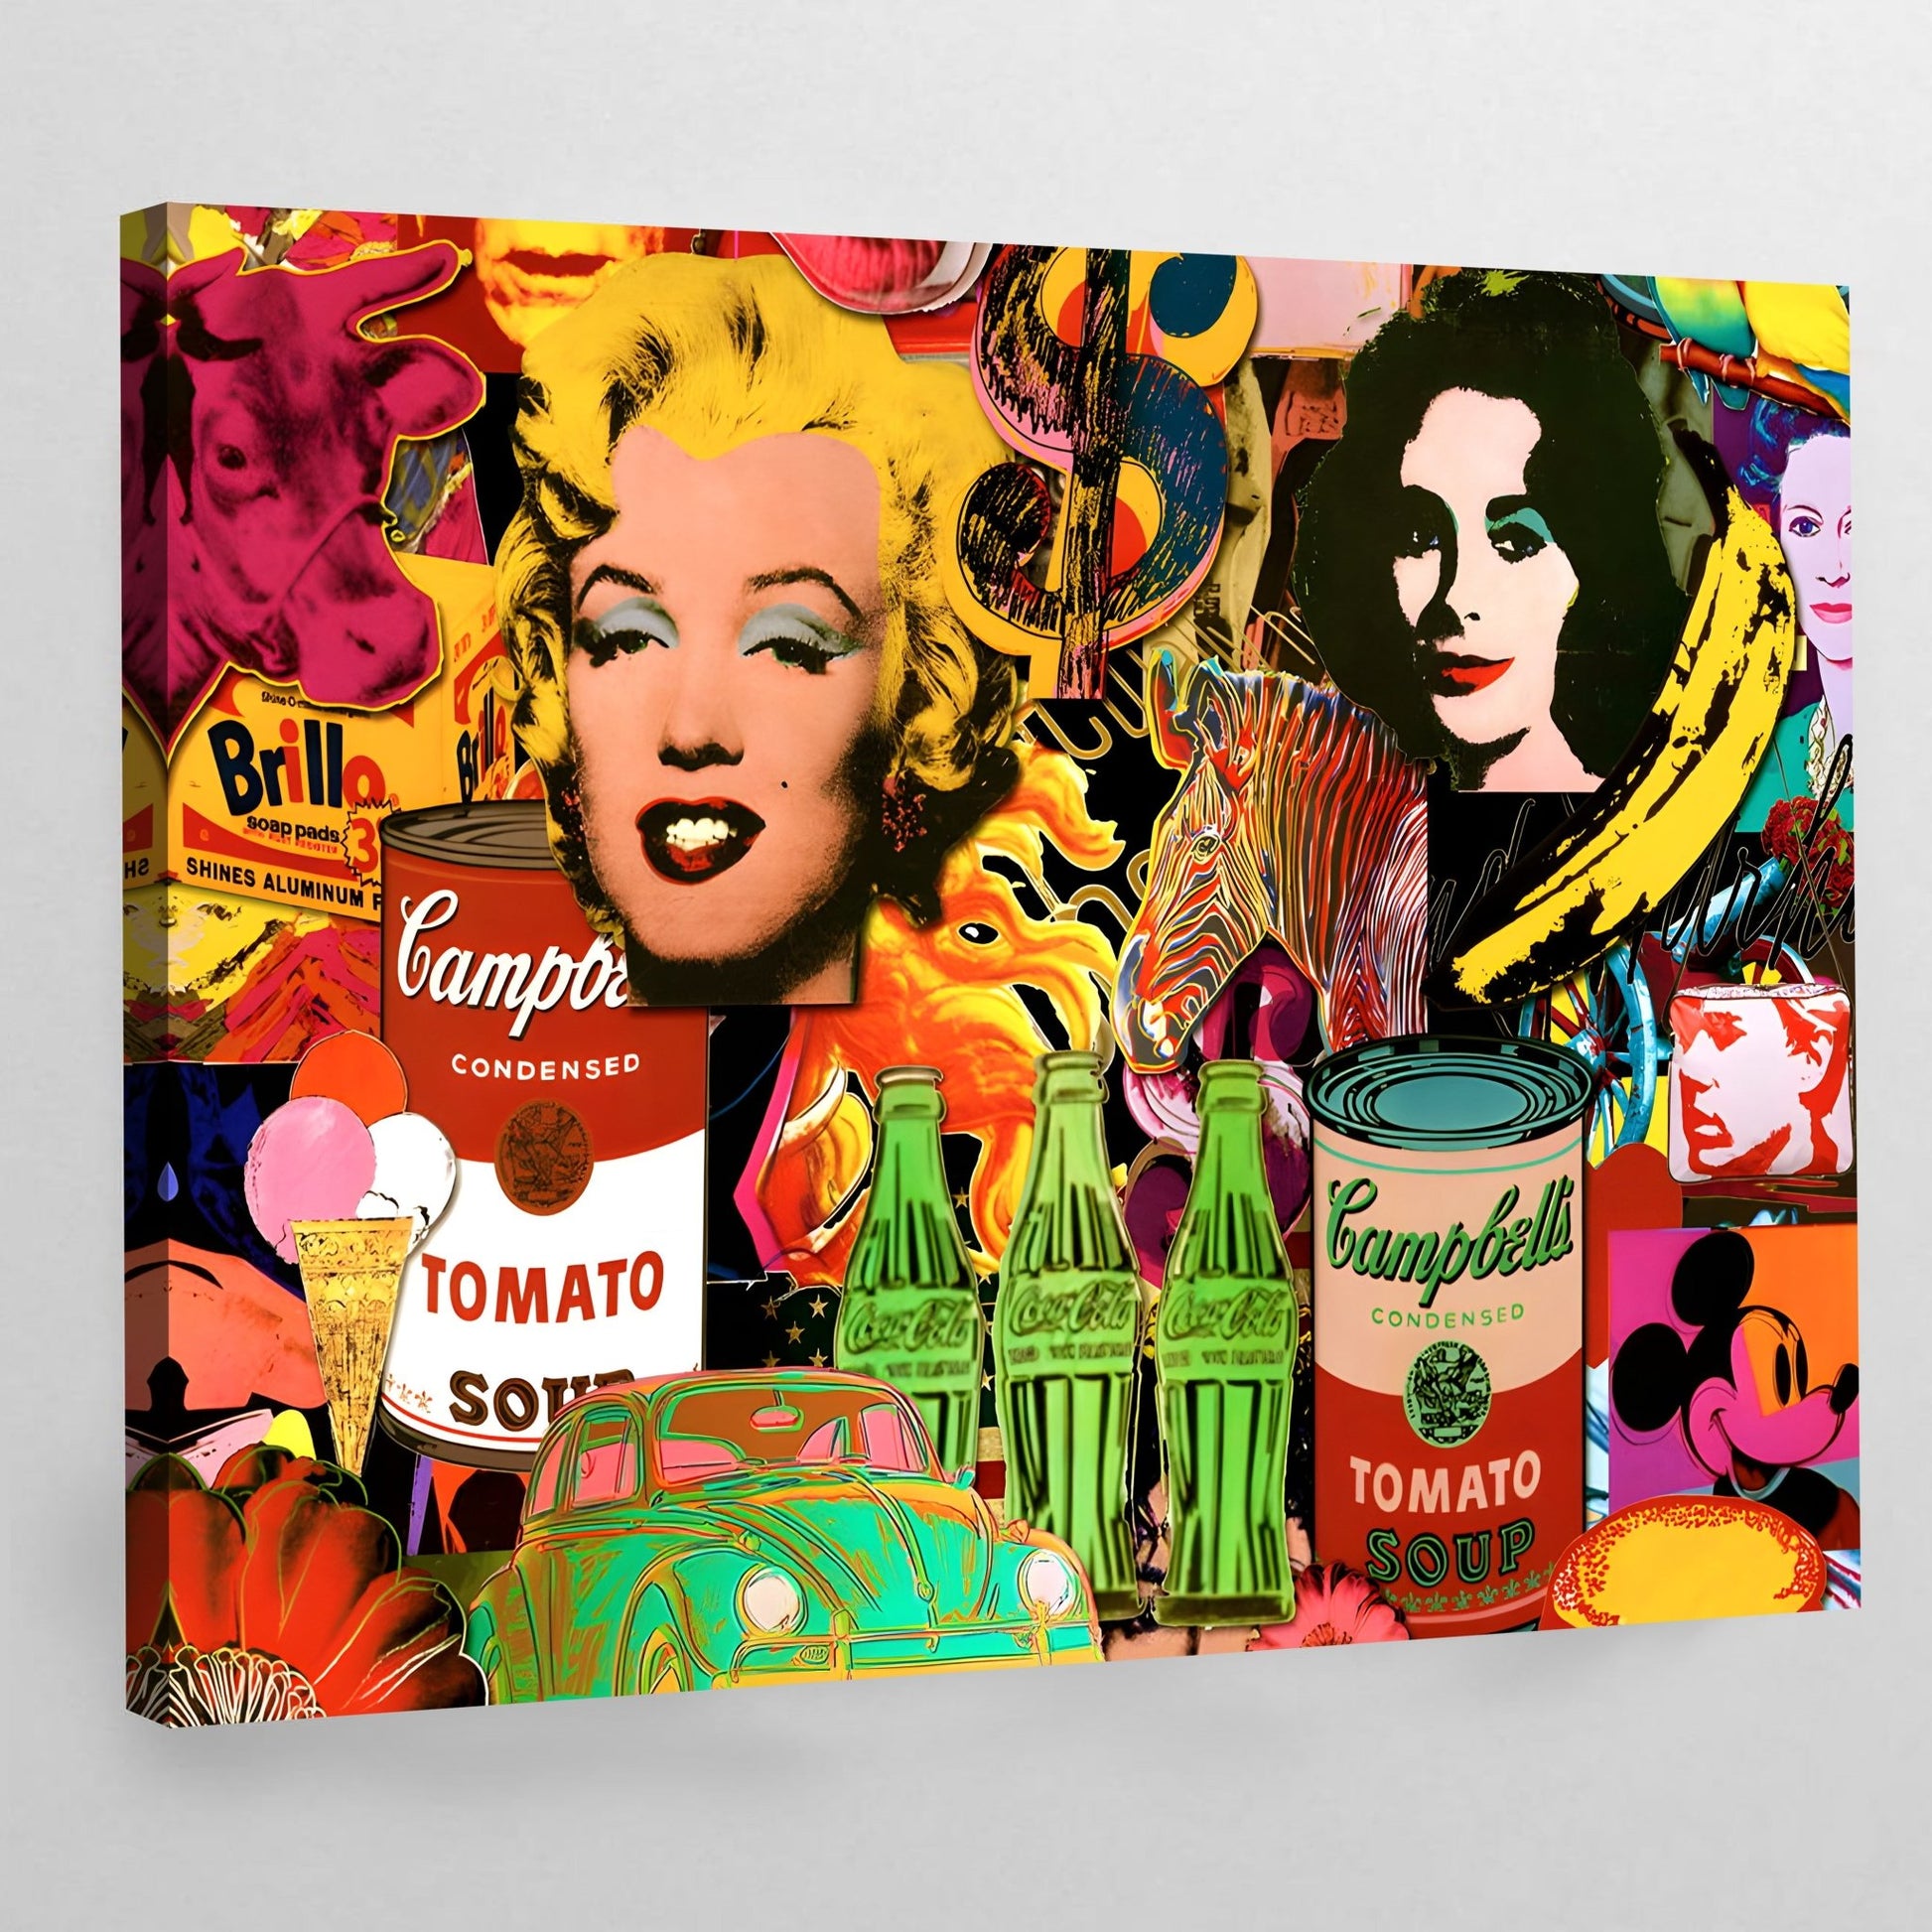 Cuadro Pop Art Collage - La Casa Del Cuadro